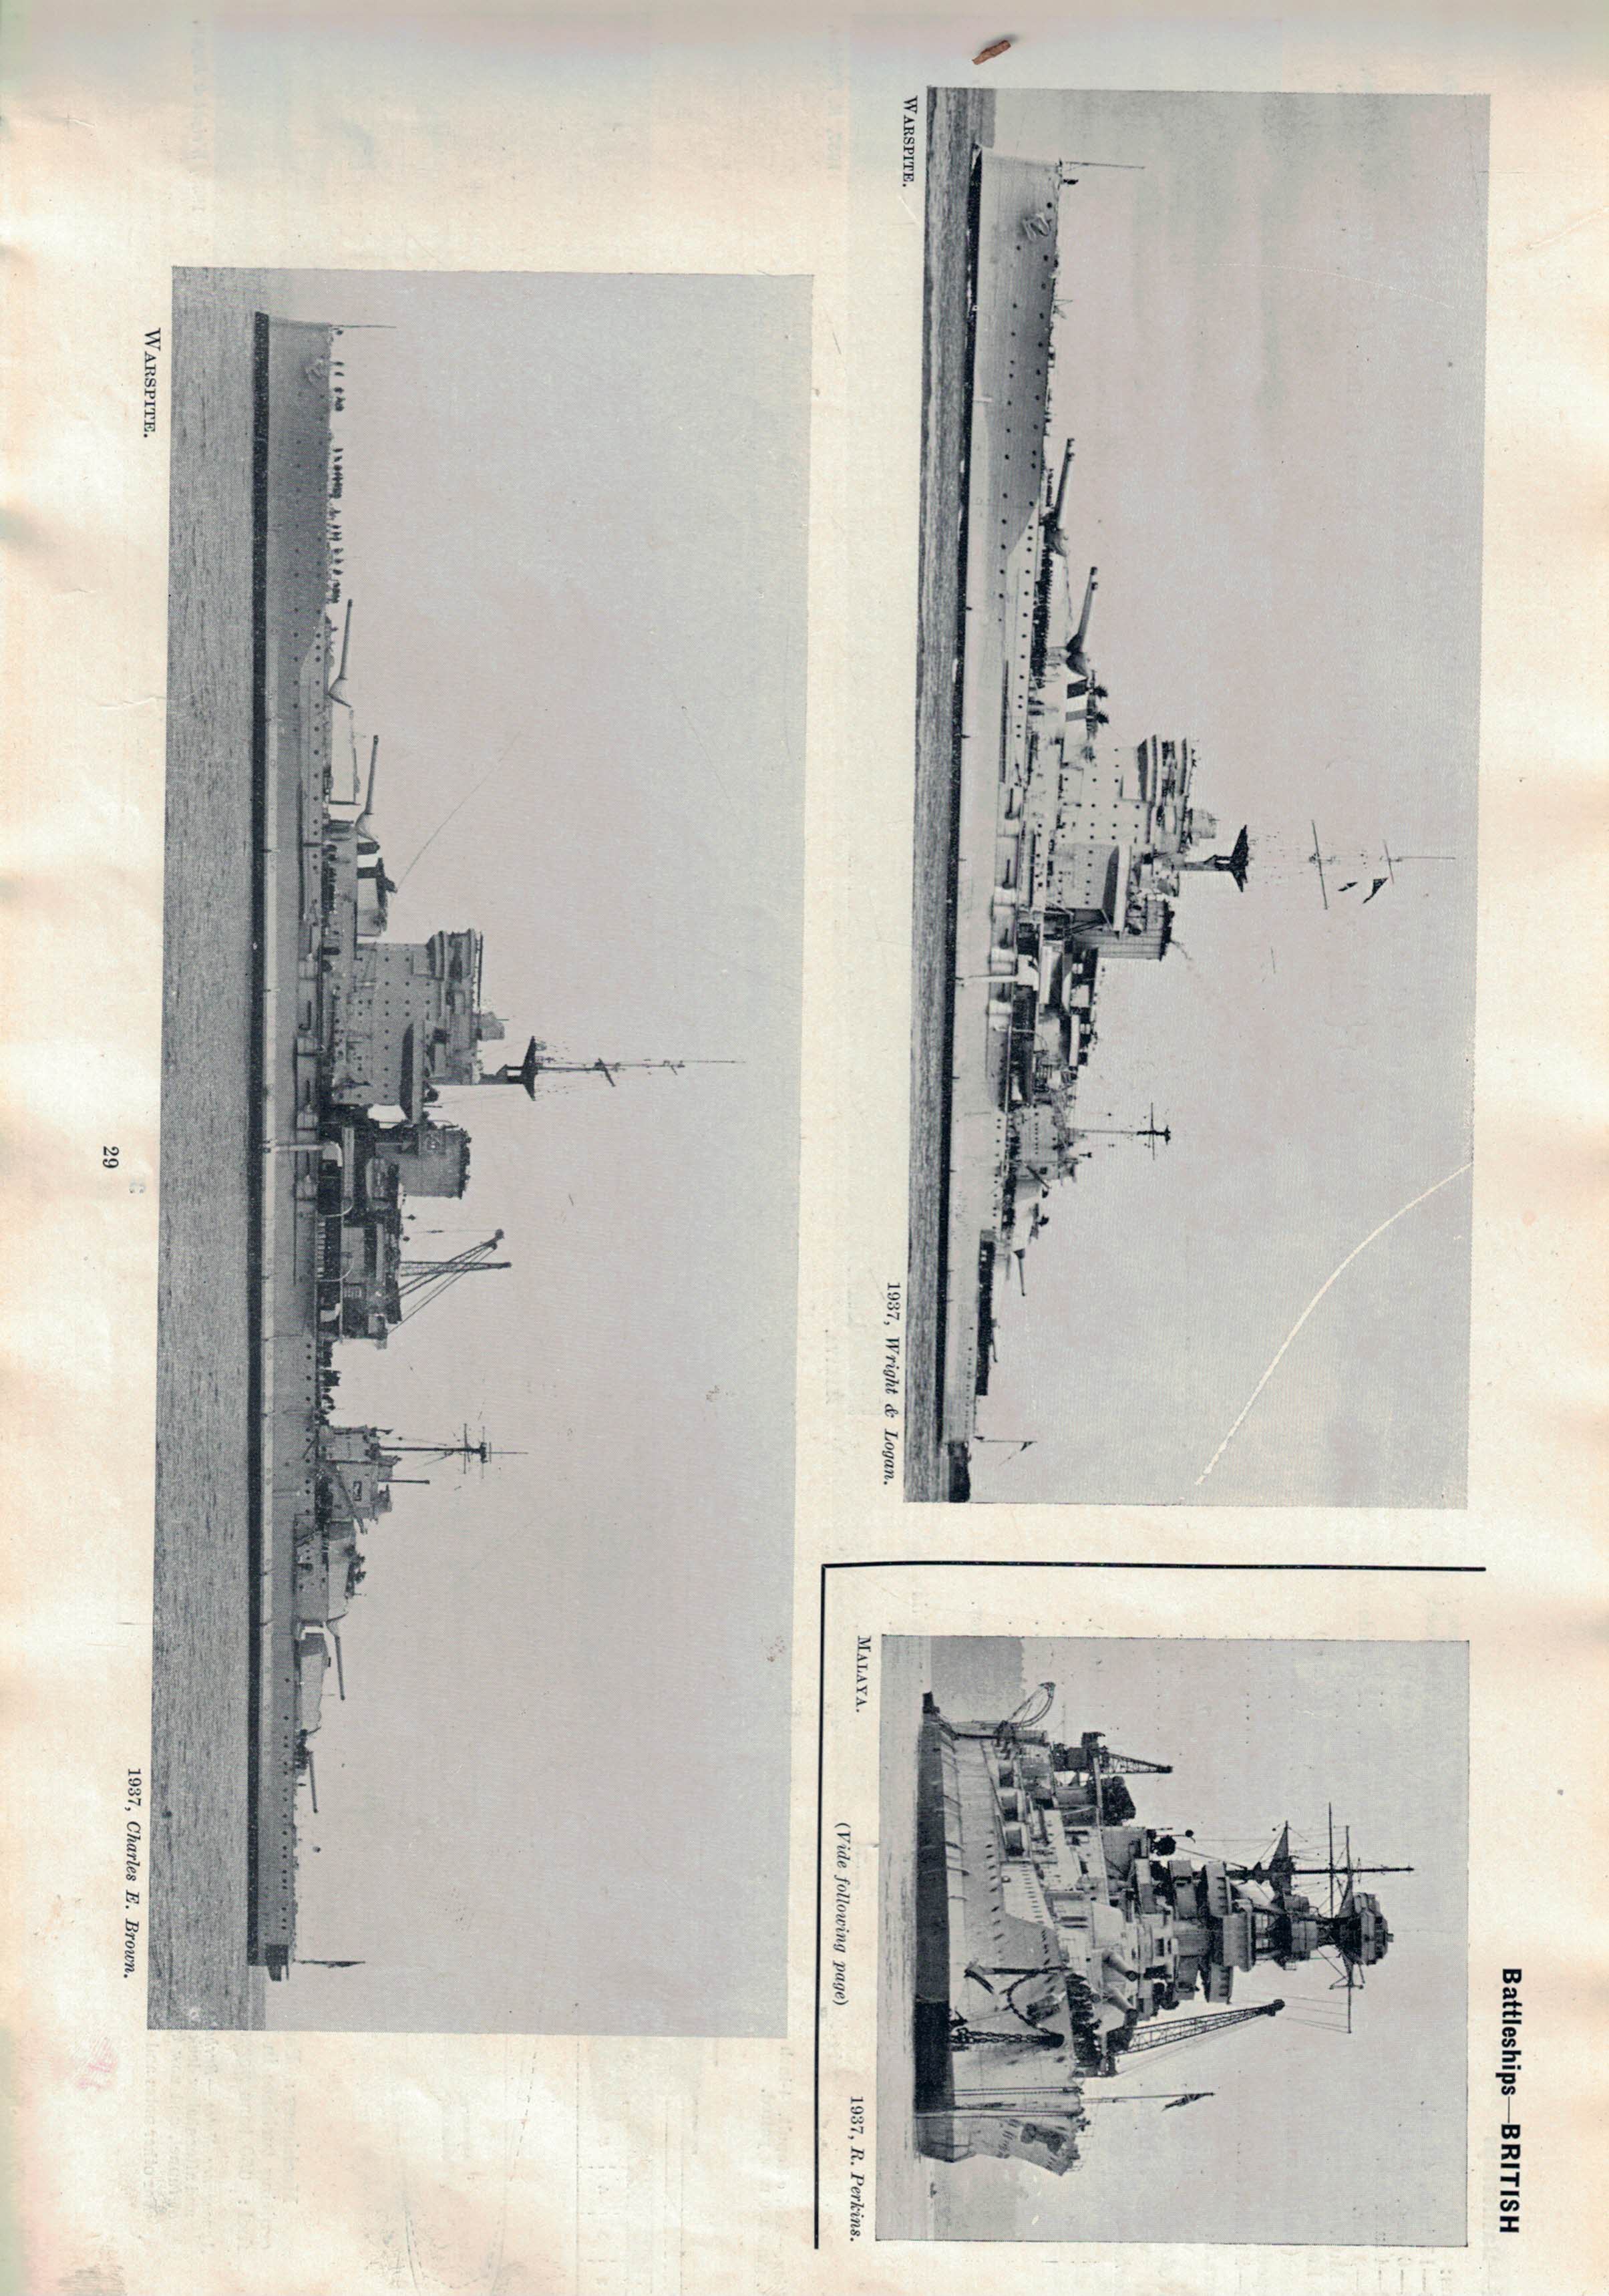 Jane's Fighting Ships 1939